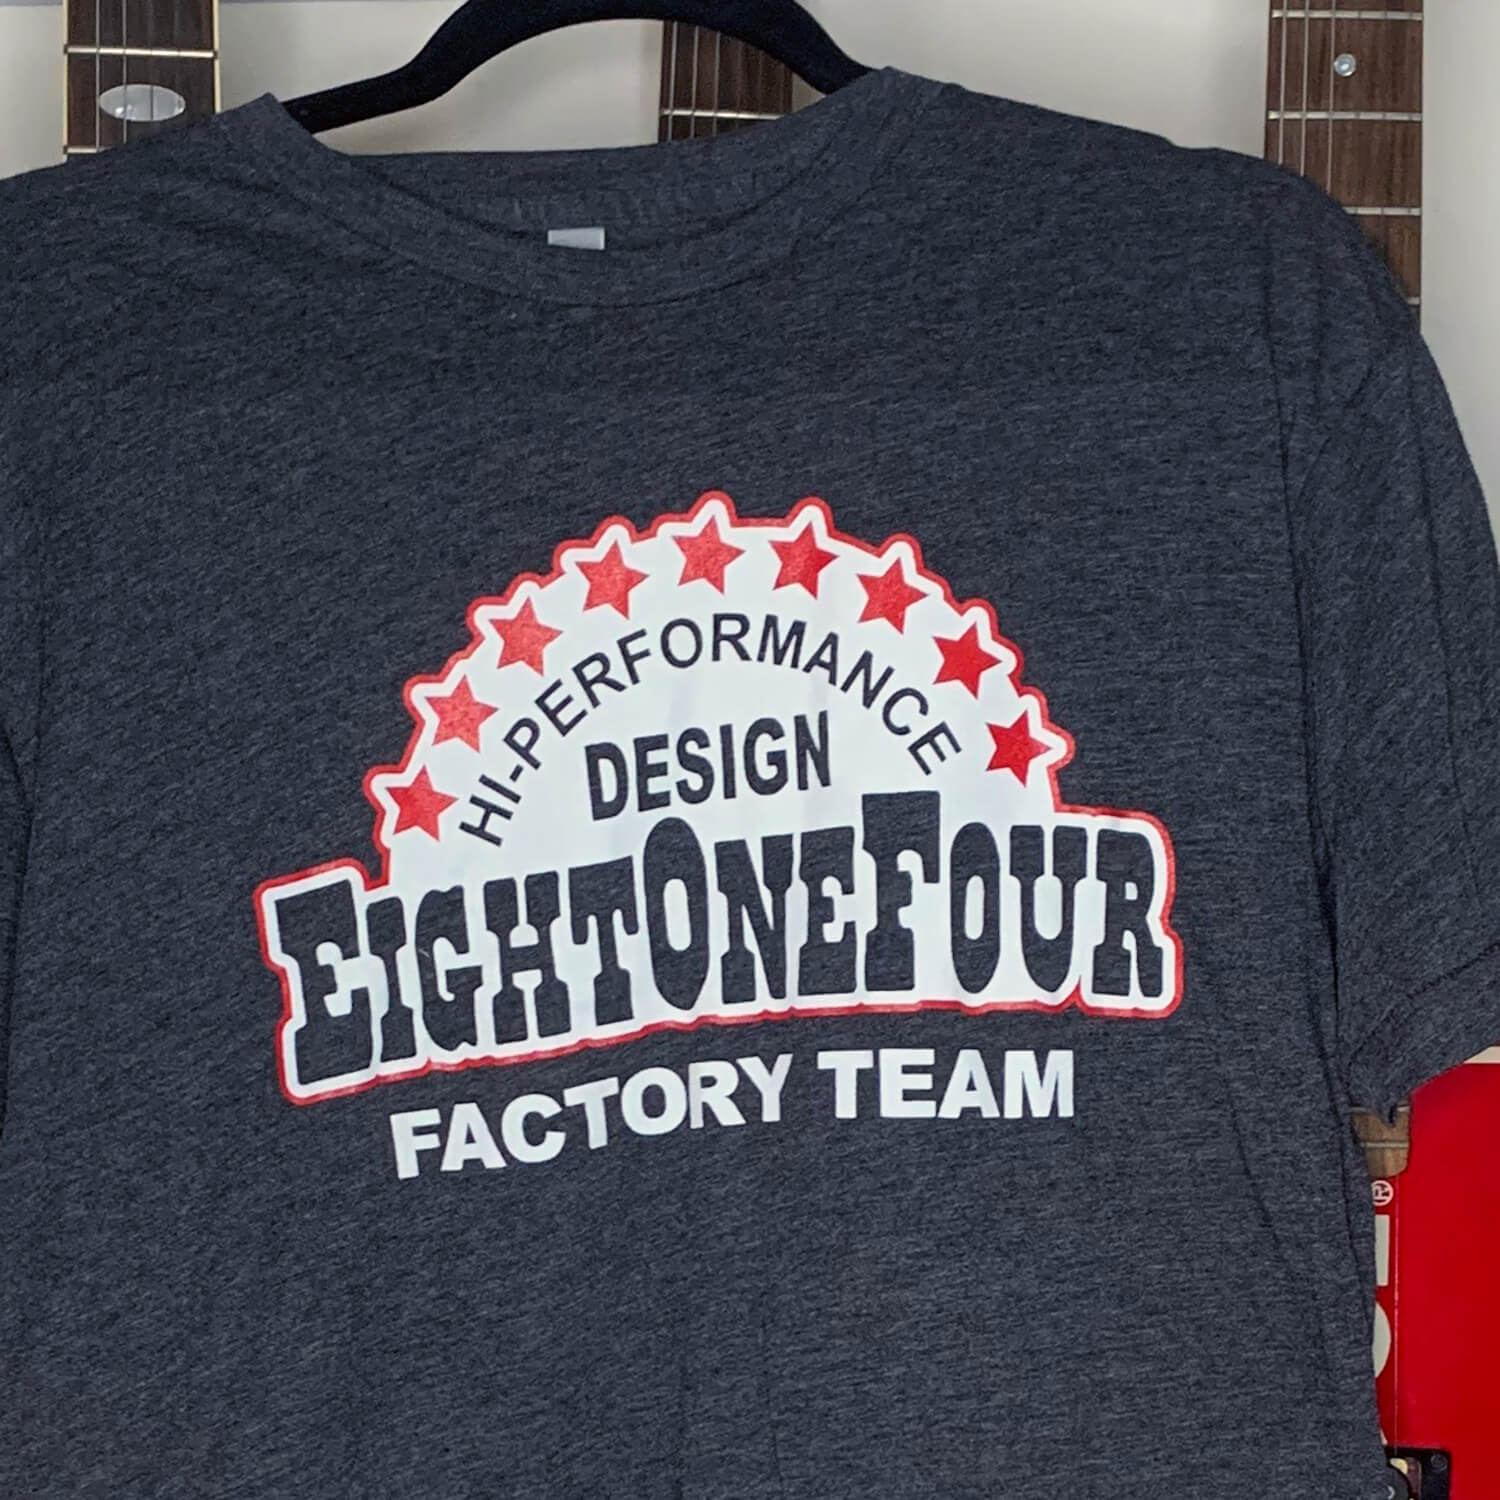 EightOneFour Design Factory Team Tee